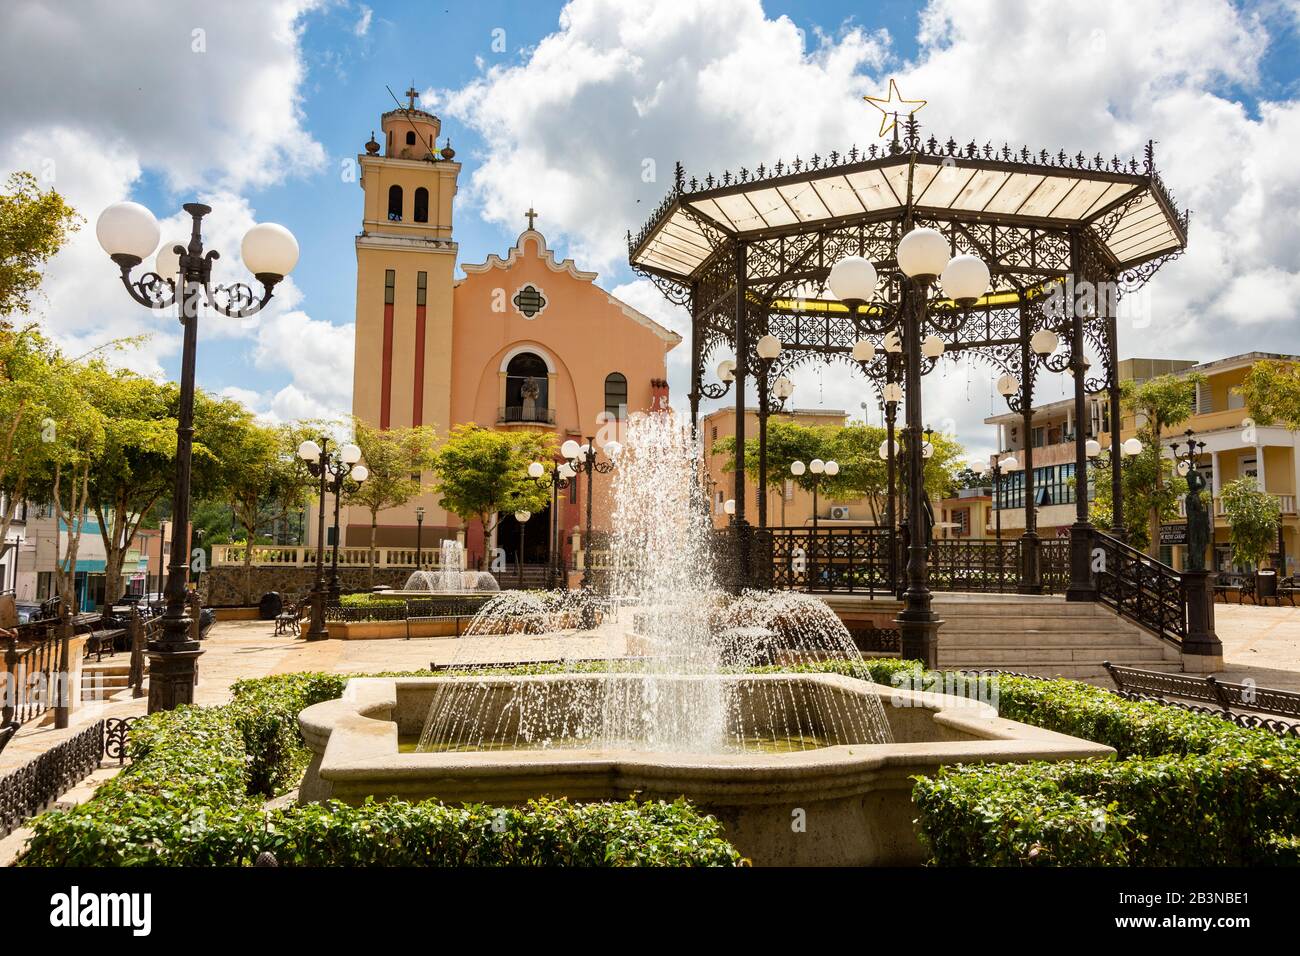 Town square and church of San Antonia de Padua, Barranquitas, Cordillera Central, Puerto Rico, Caribbean, Central America Stock Photo